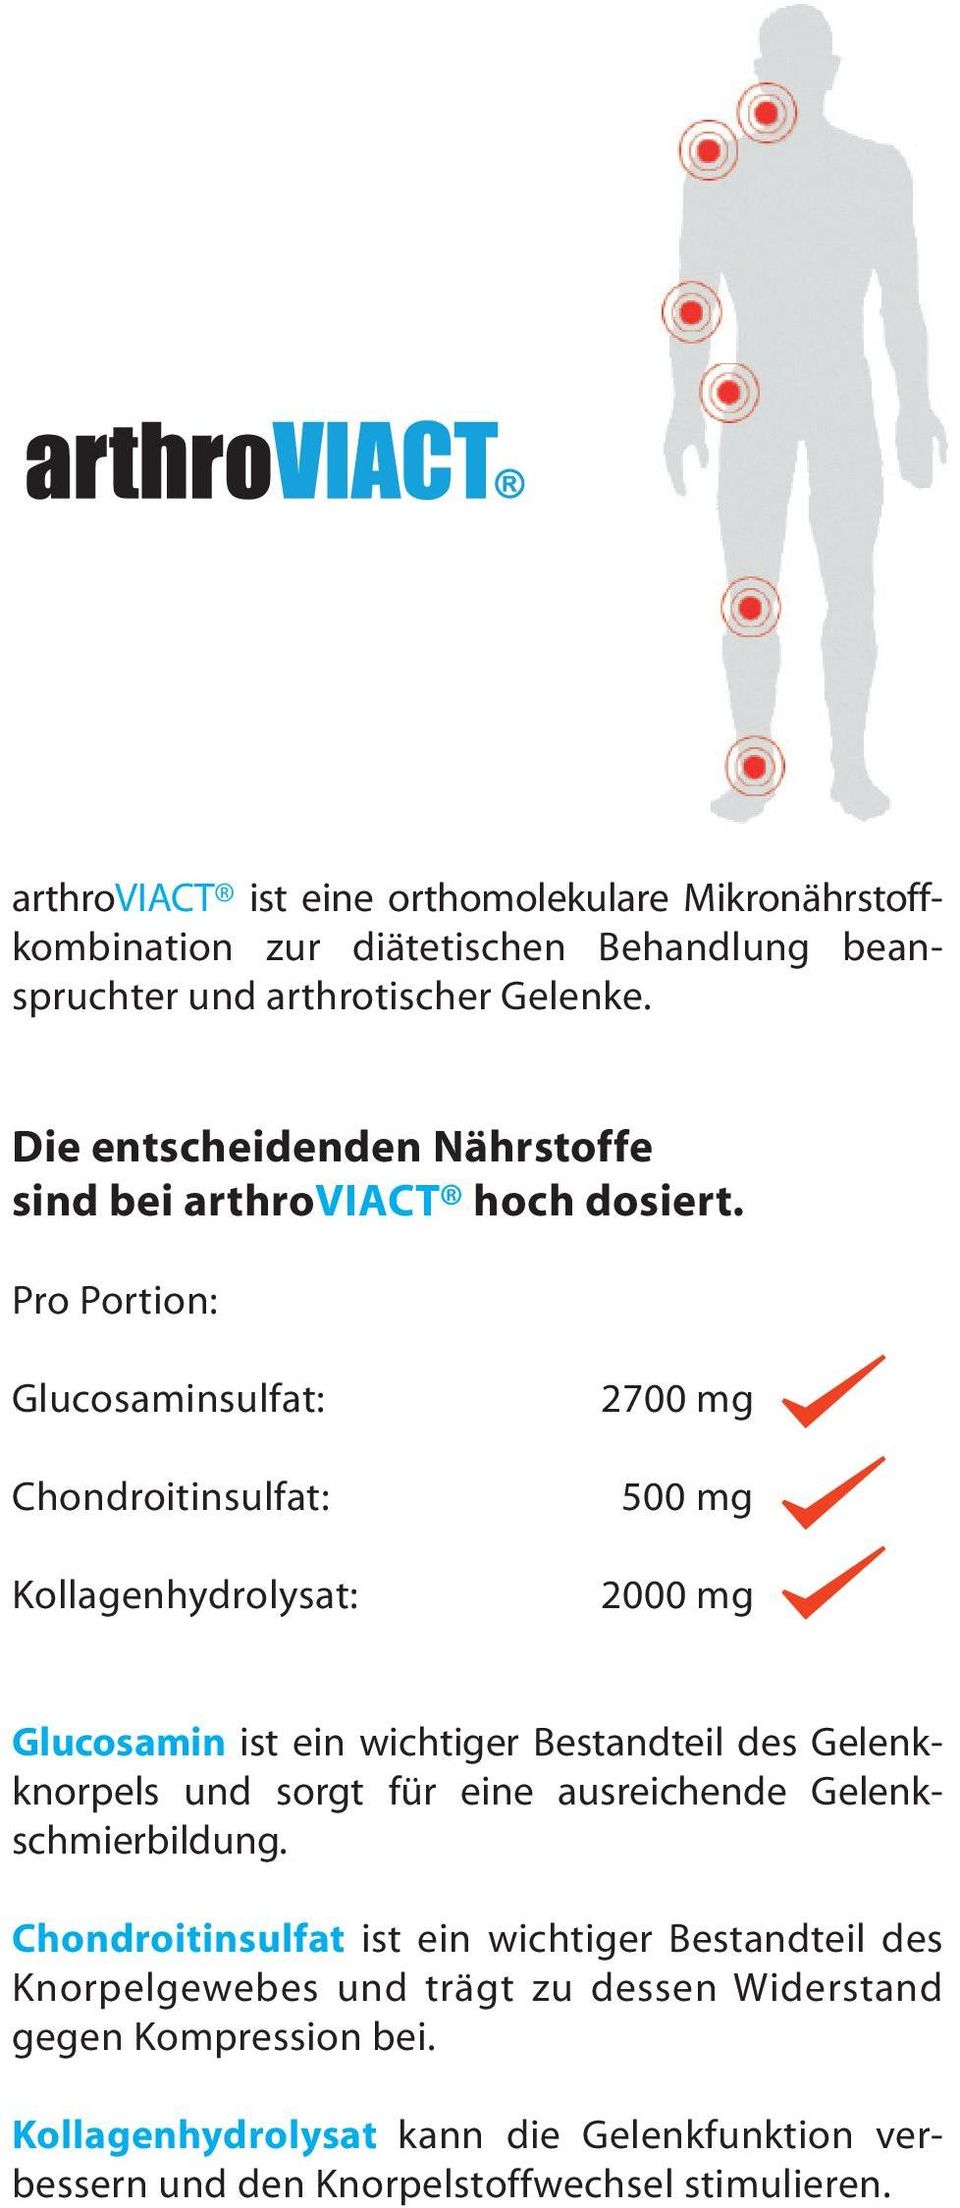 Pro Portion: Glucosaminsulfat: Chondroitinsulfat: Kollagenhydrolysat: 2700 mg 500 mg 2000 mg Glucosamin ist ein wichtiger Bestandteil des Gelenkknorpels